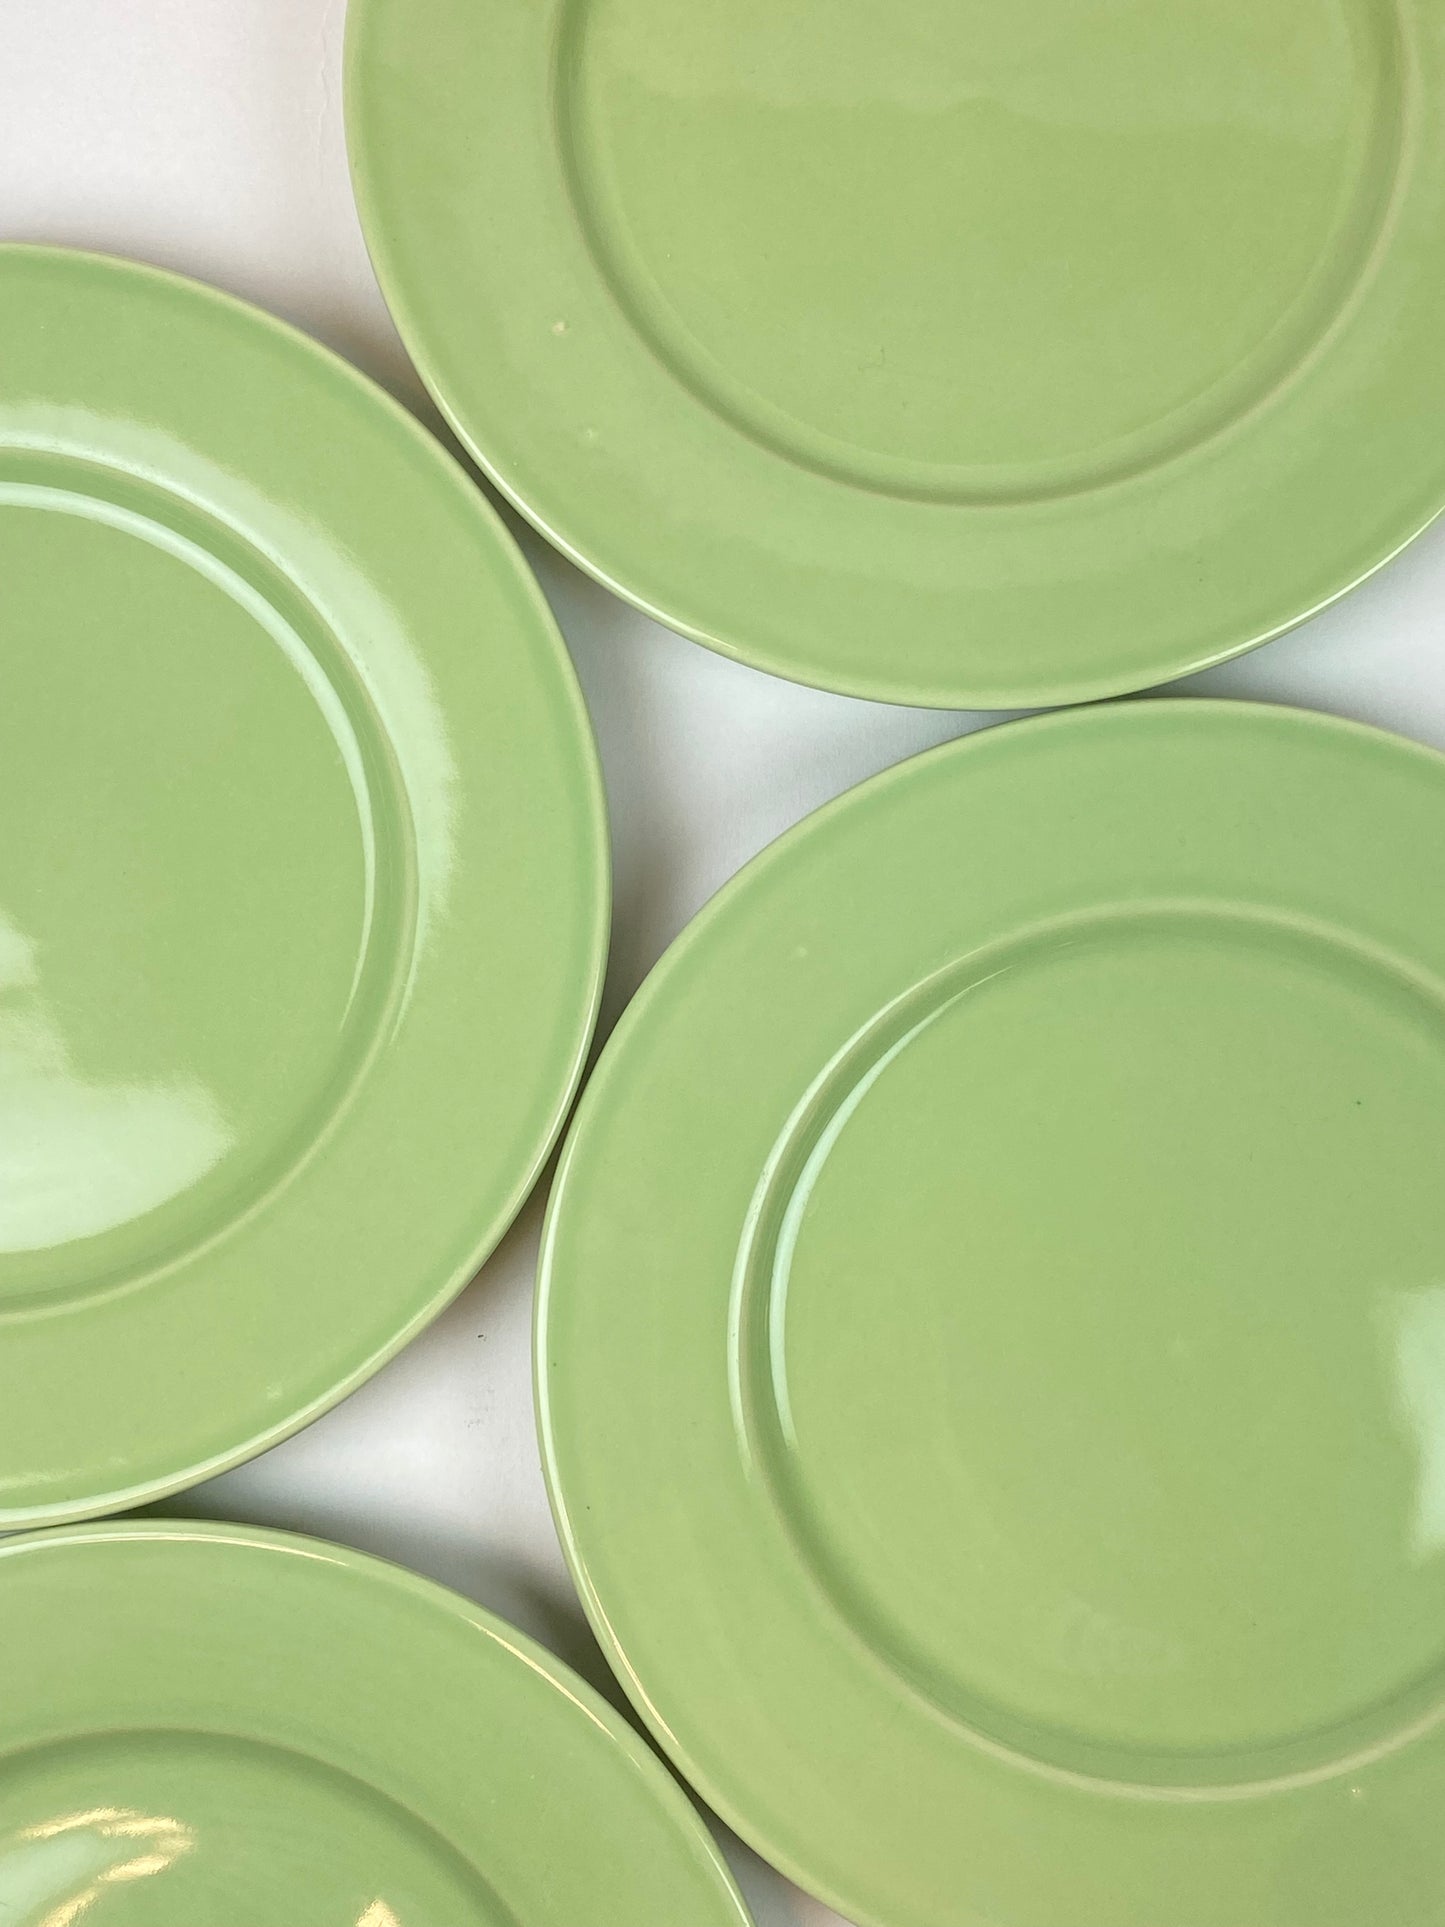 four pastel green plates